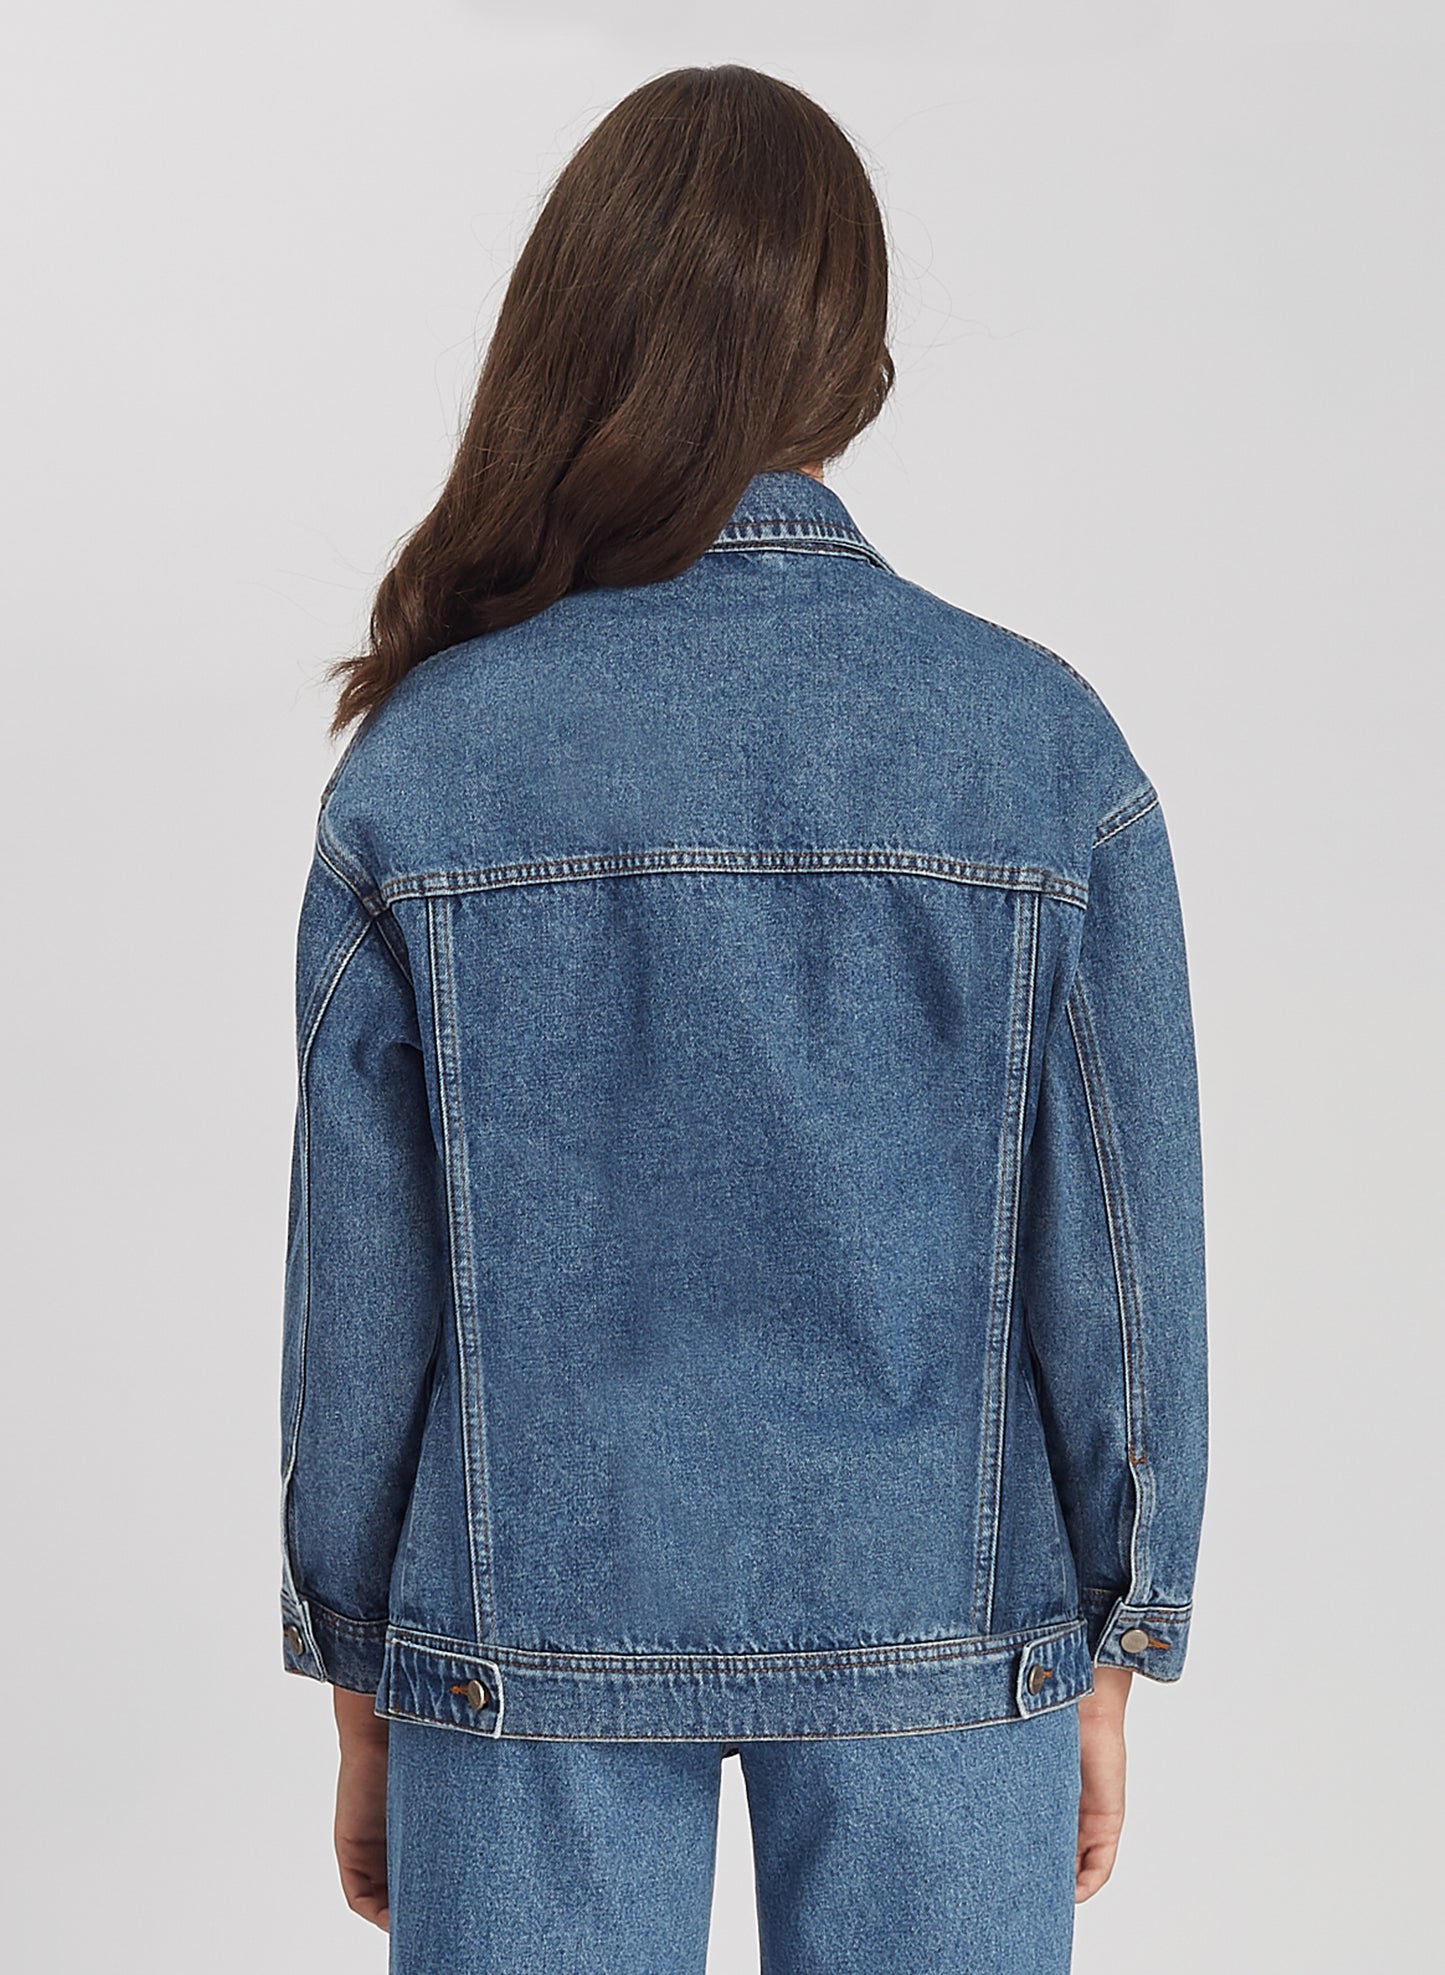 RITA - Oversize Denim Jeans Jacket - Mid Blue